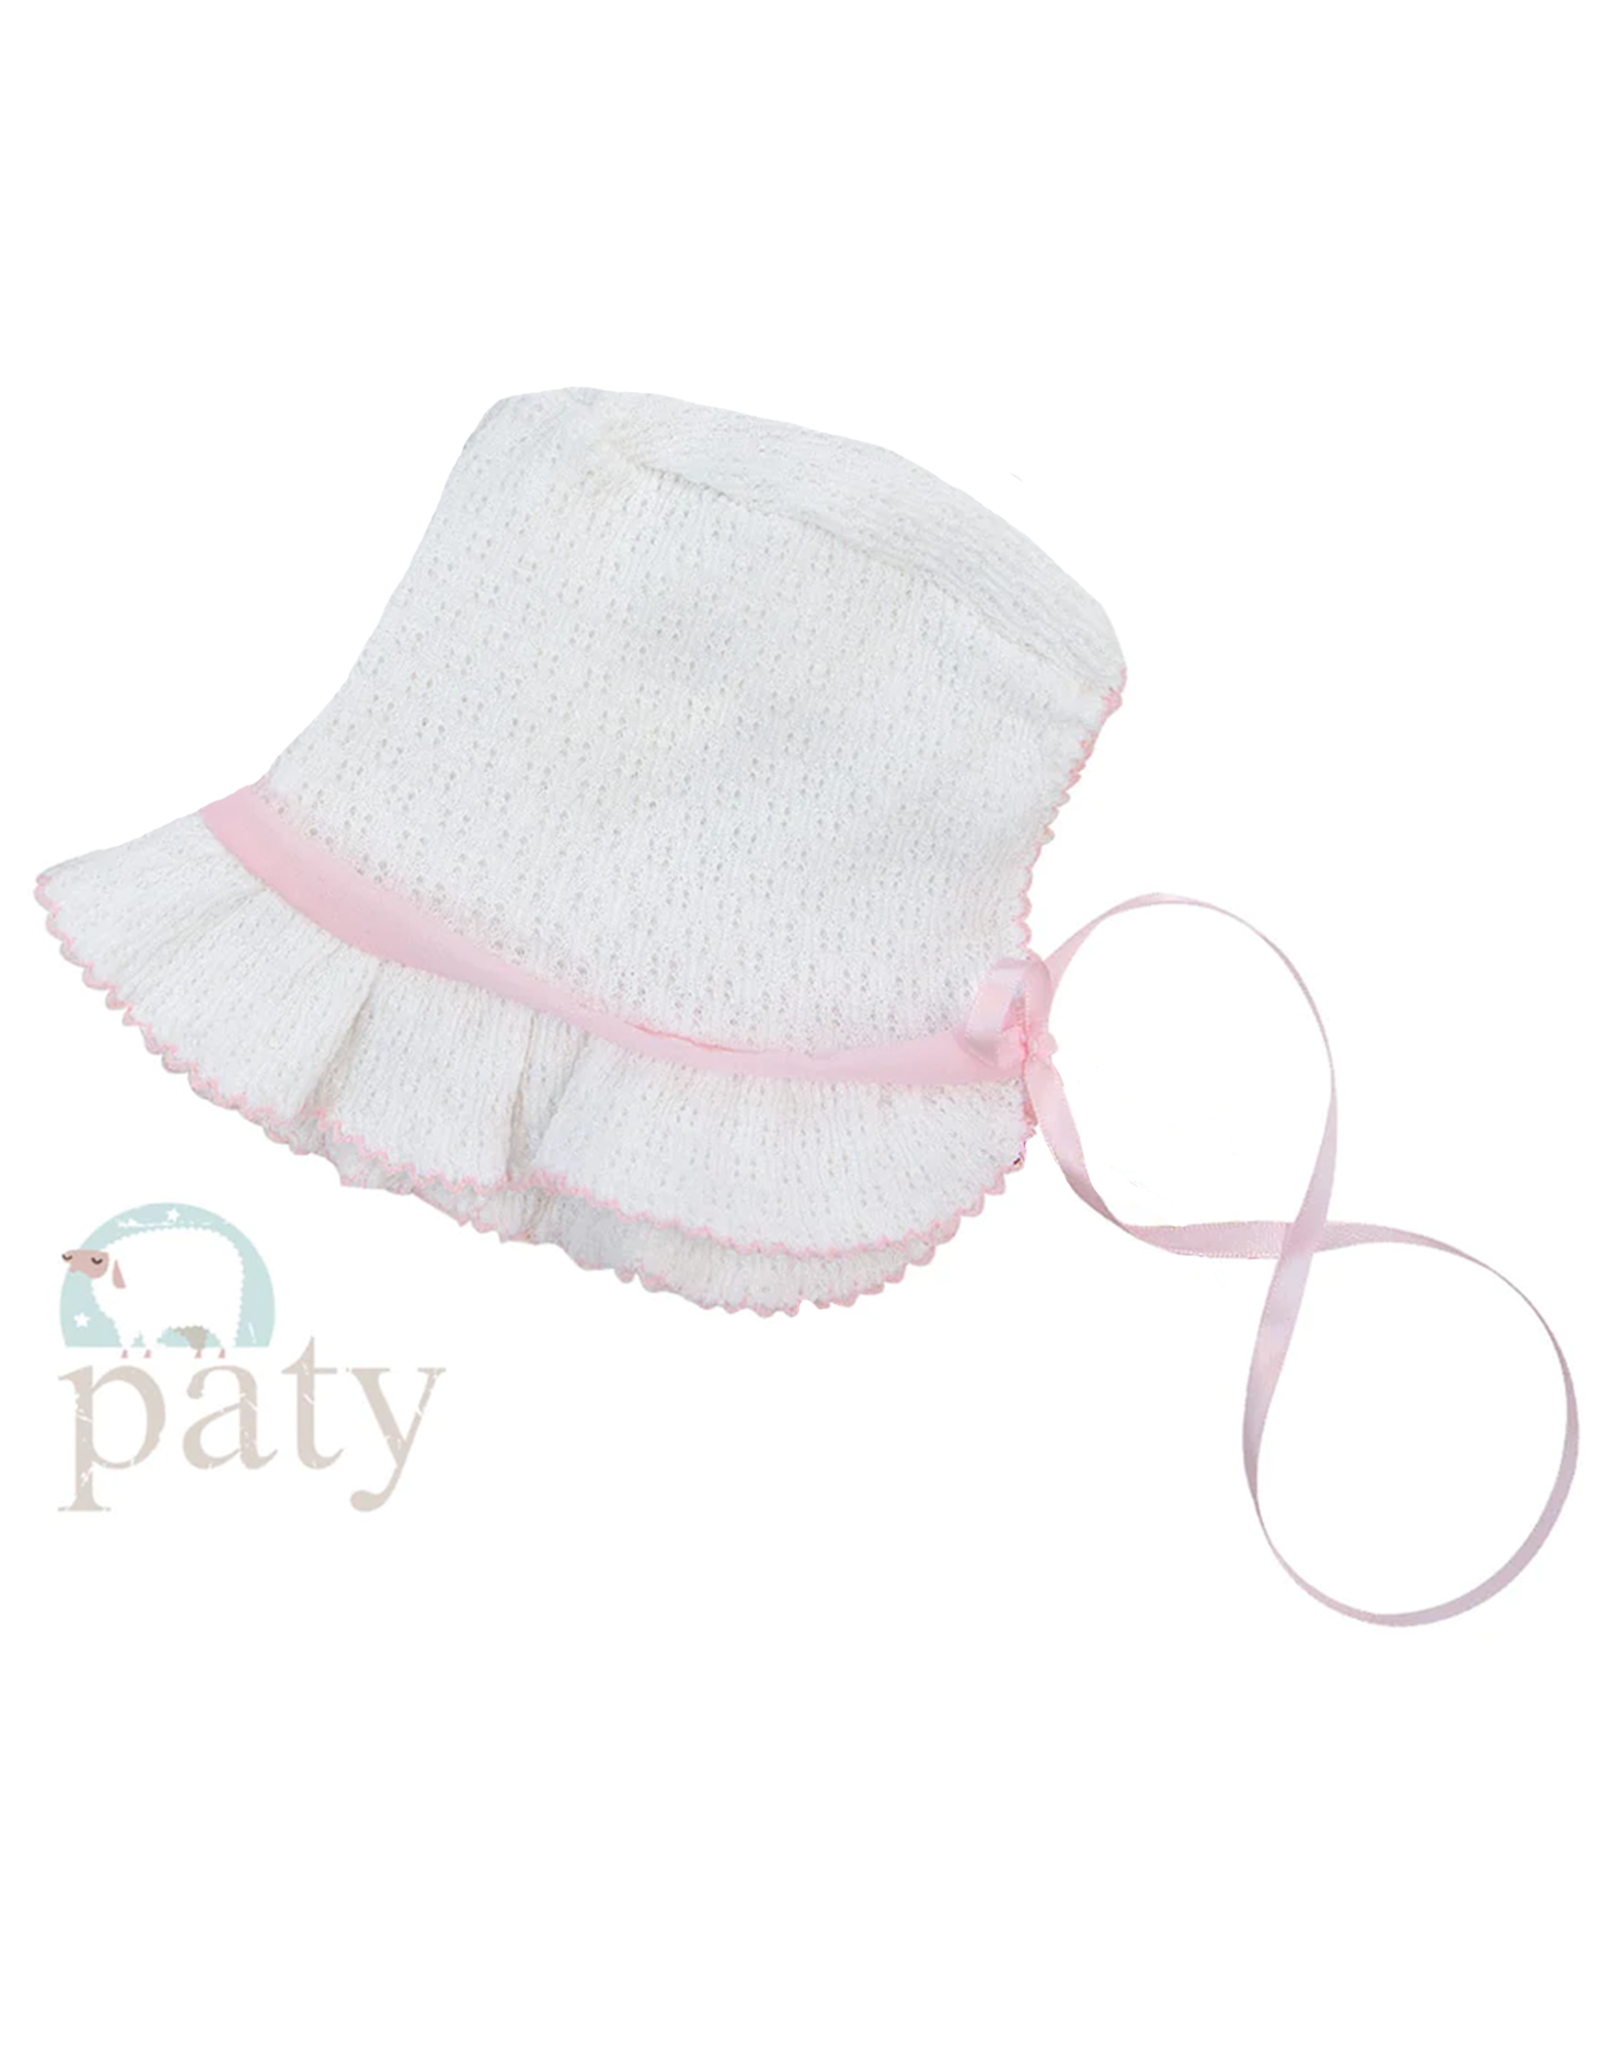 Paty, Inc. 118CH Bonnet w/pink chiffon